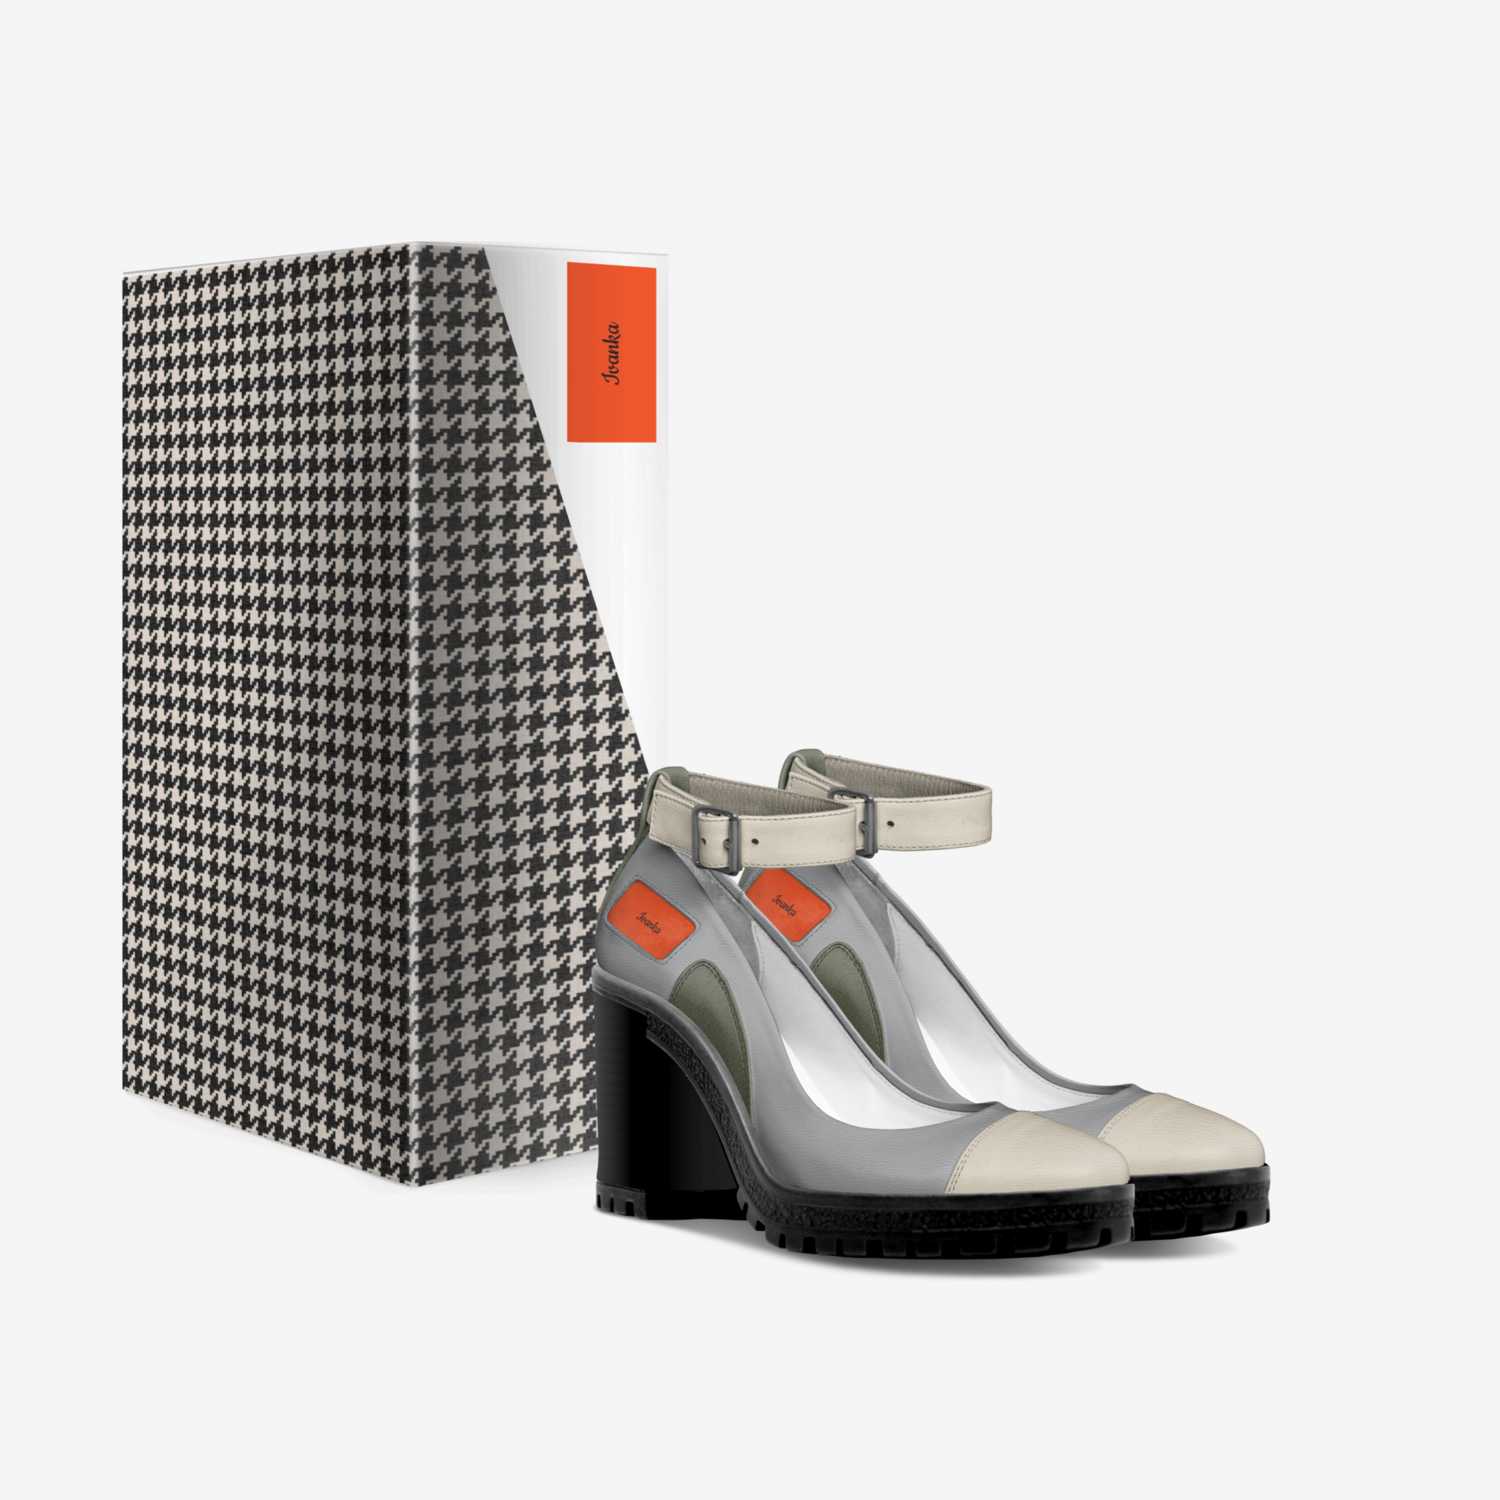 Ivanka custom made in Italy shoes by Raisibe | Box view